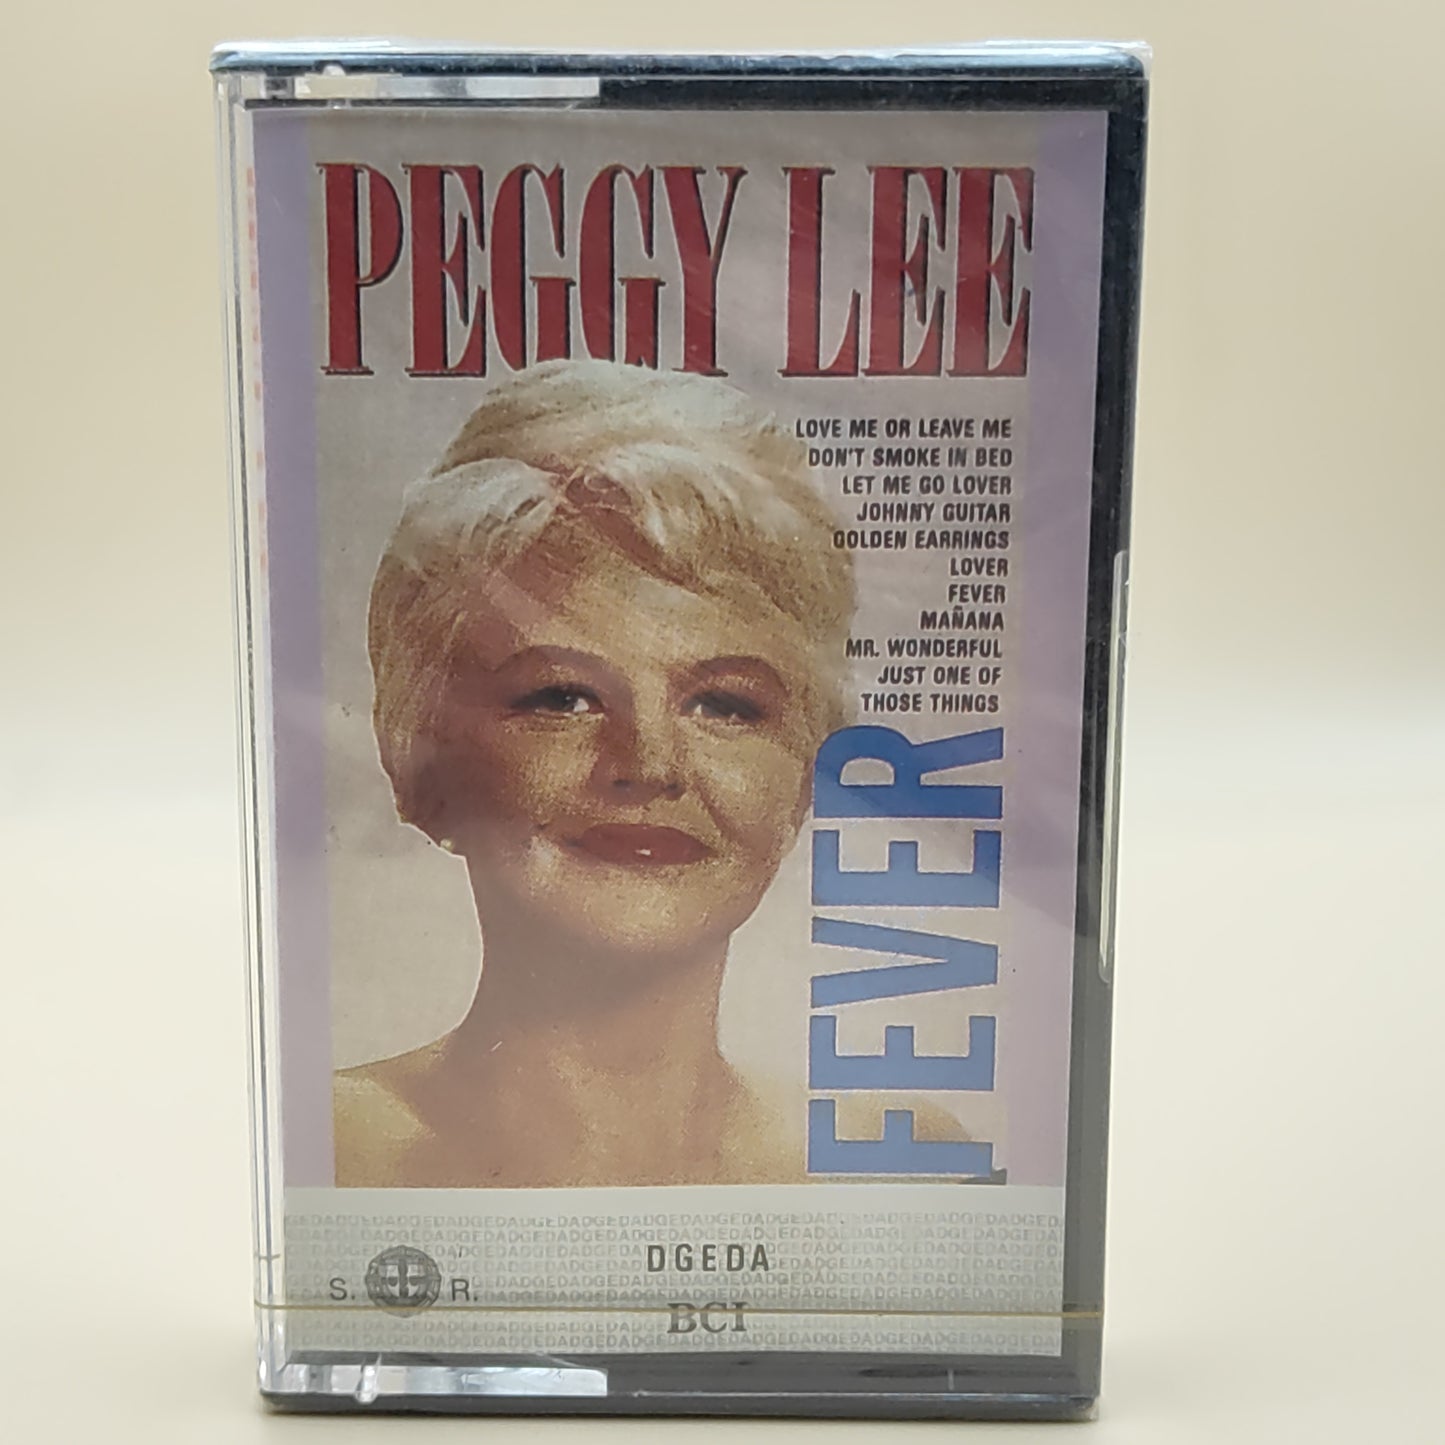 PEGGY LEE - FEVER